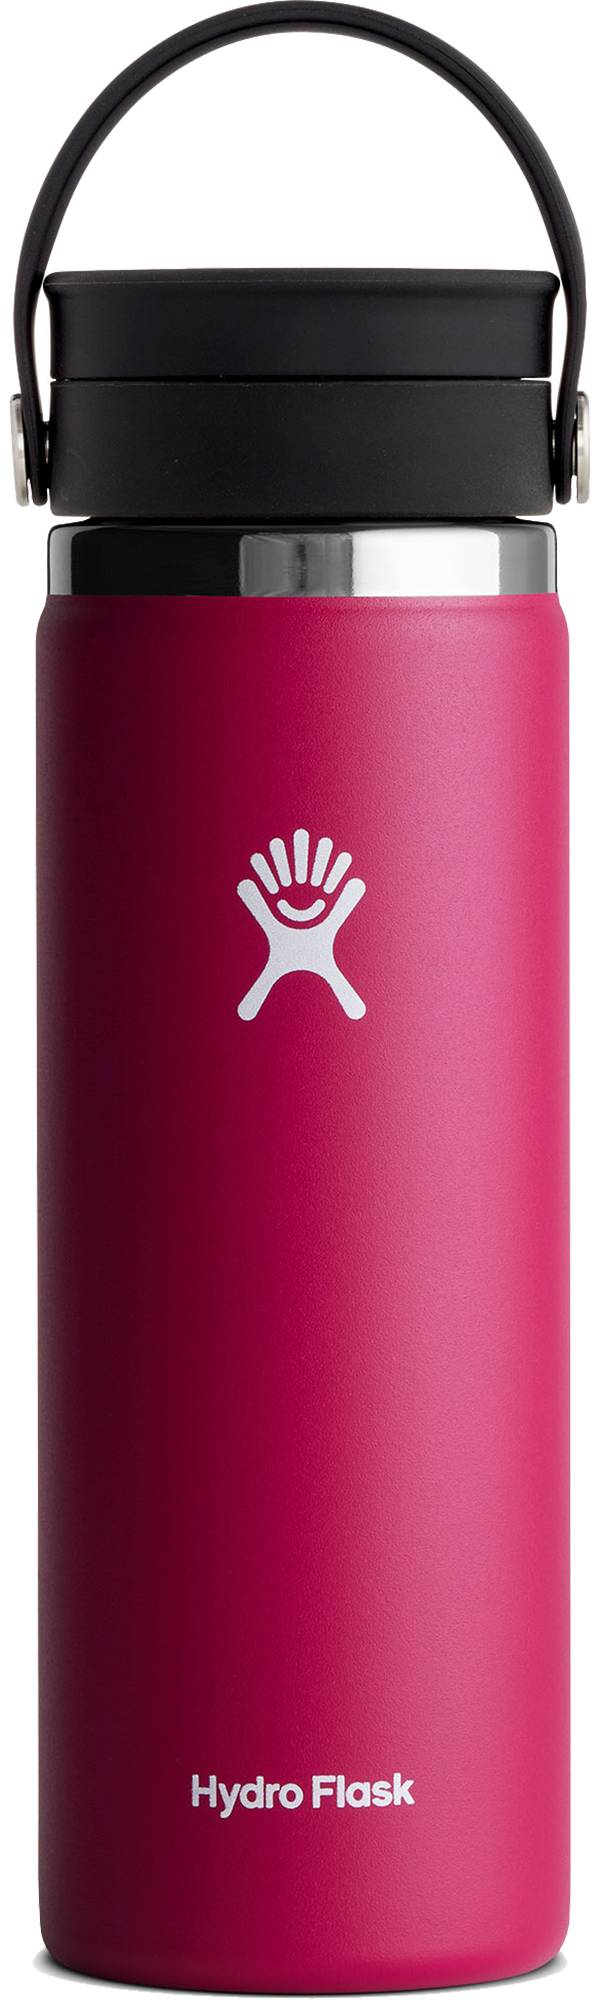 Hydro Flask 20 oz. Flex Sip Bottle product image